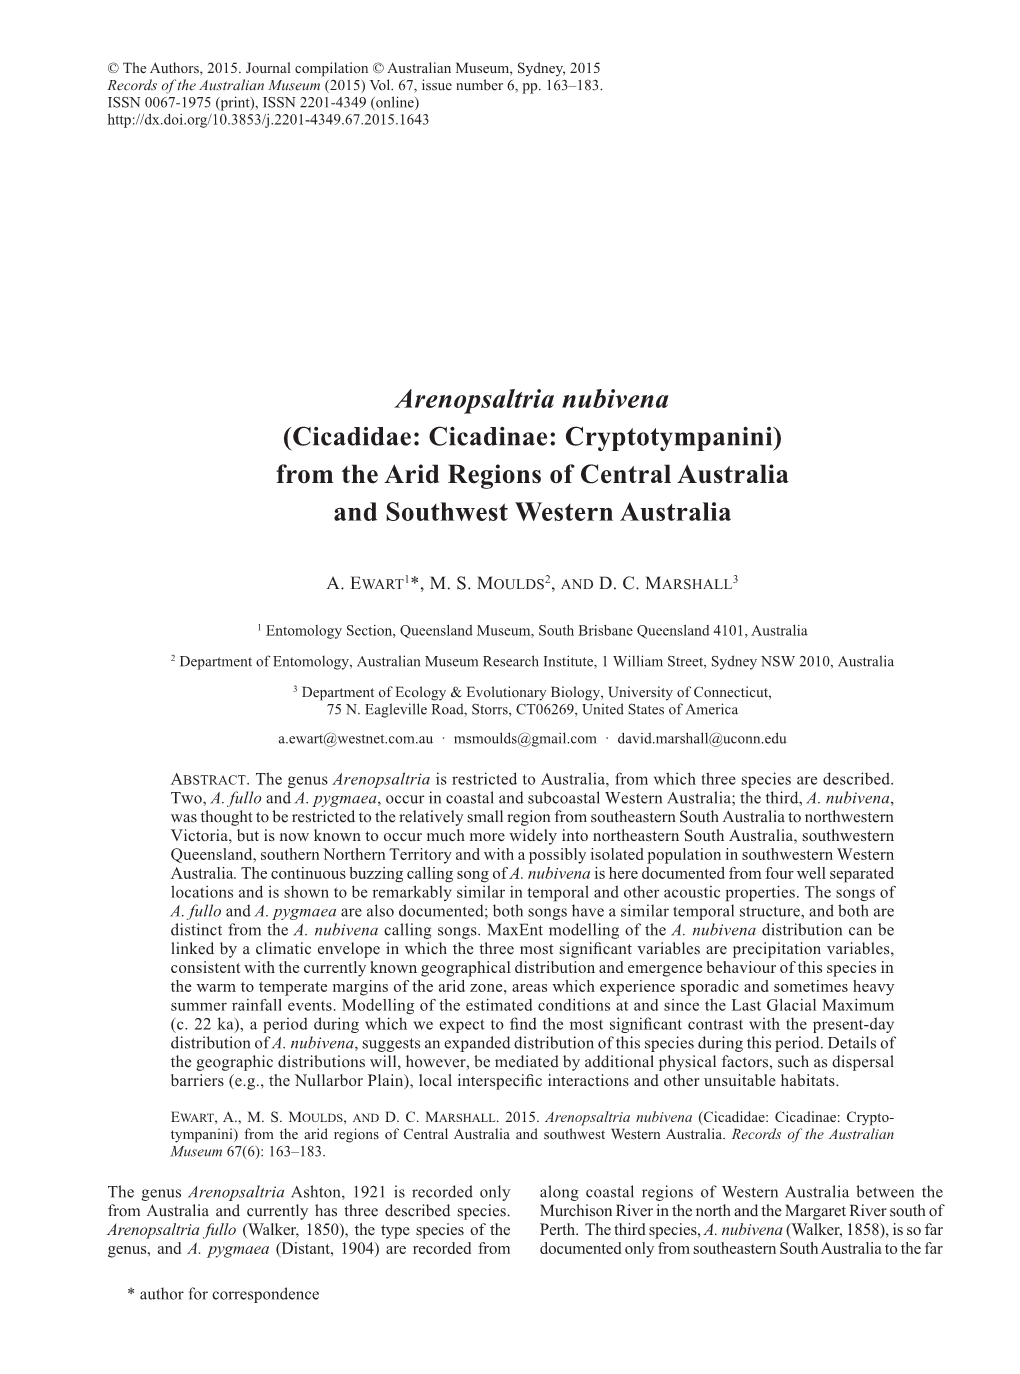 Cicadidae: Cicadinae: Cryptotympanini) from the Arid Regions of Central Australia and Southwest Western Australia